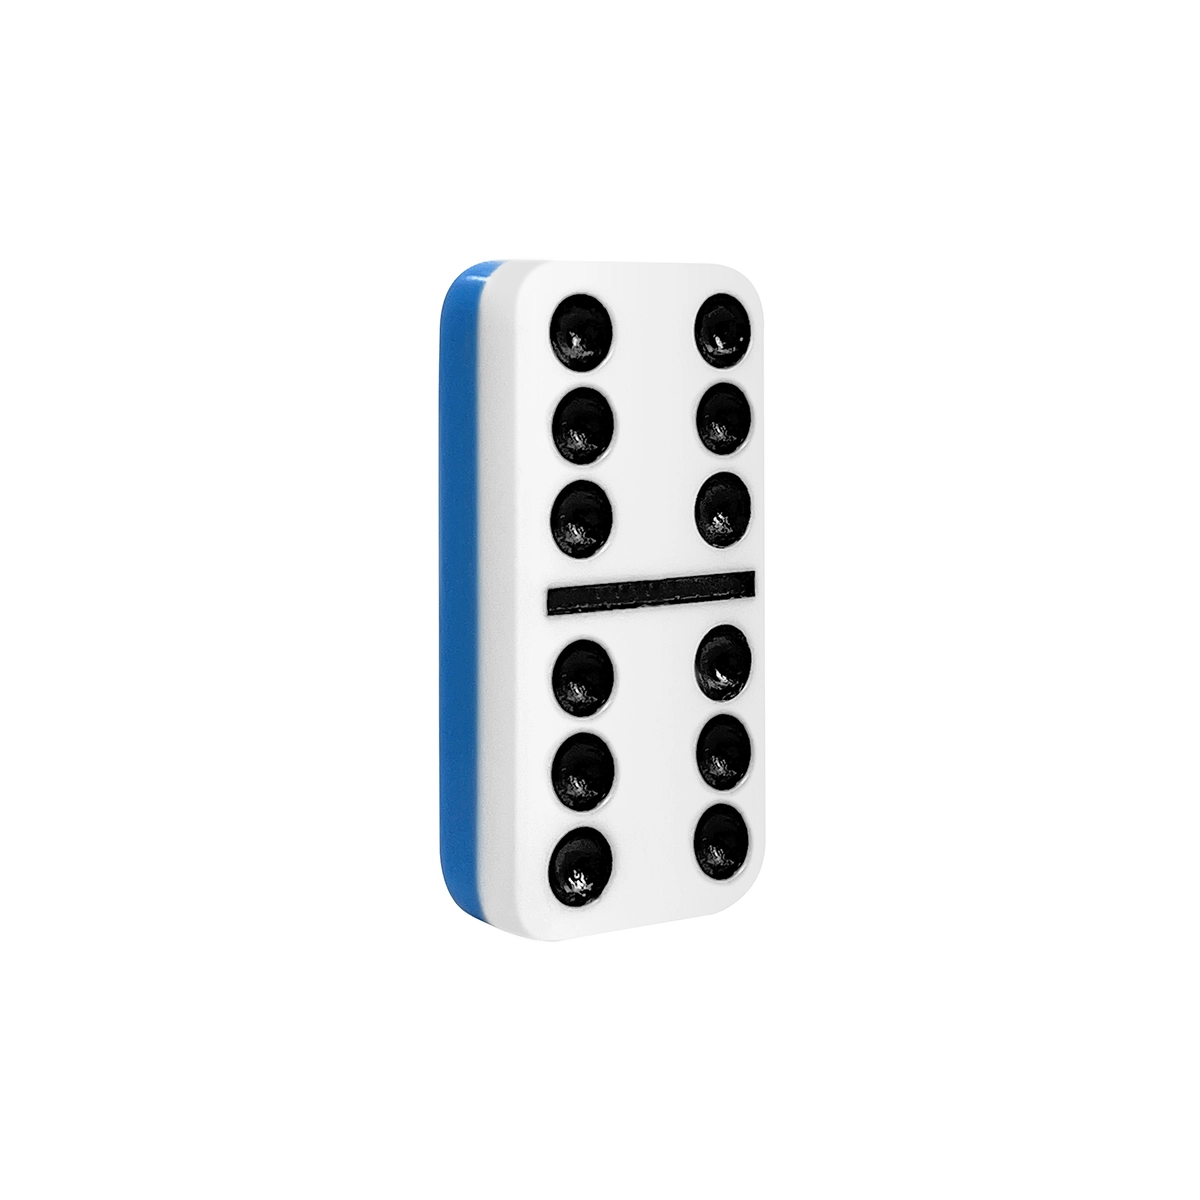 Azulejos de dominó de dos tonos